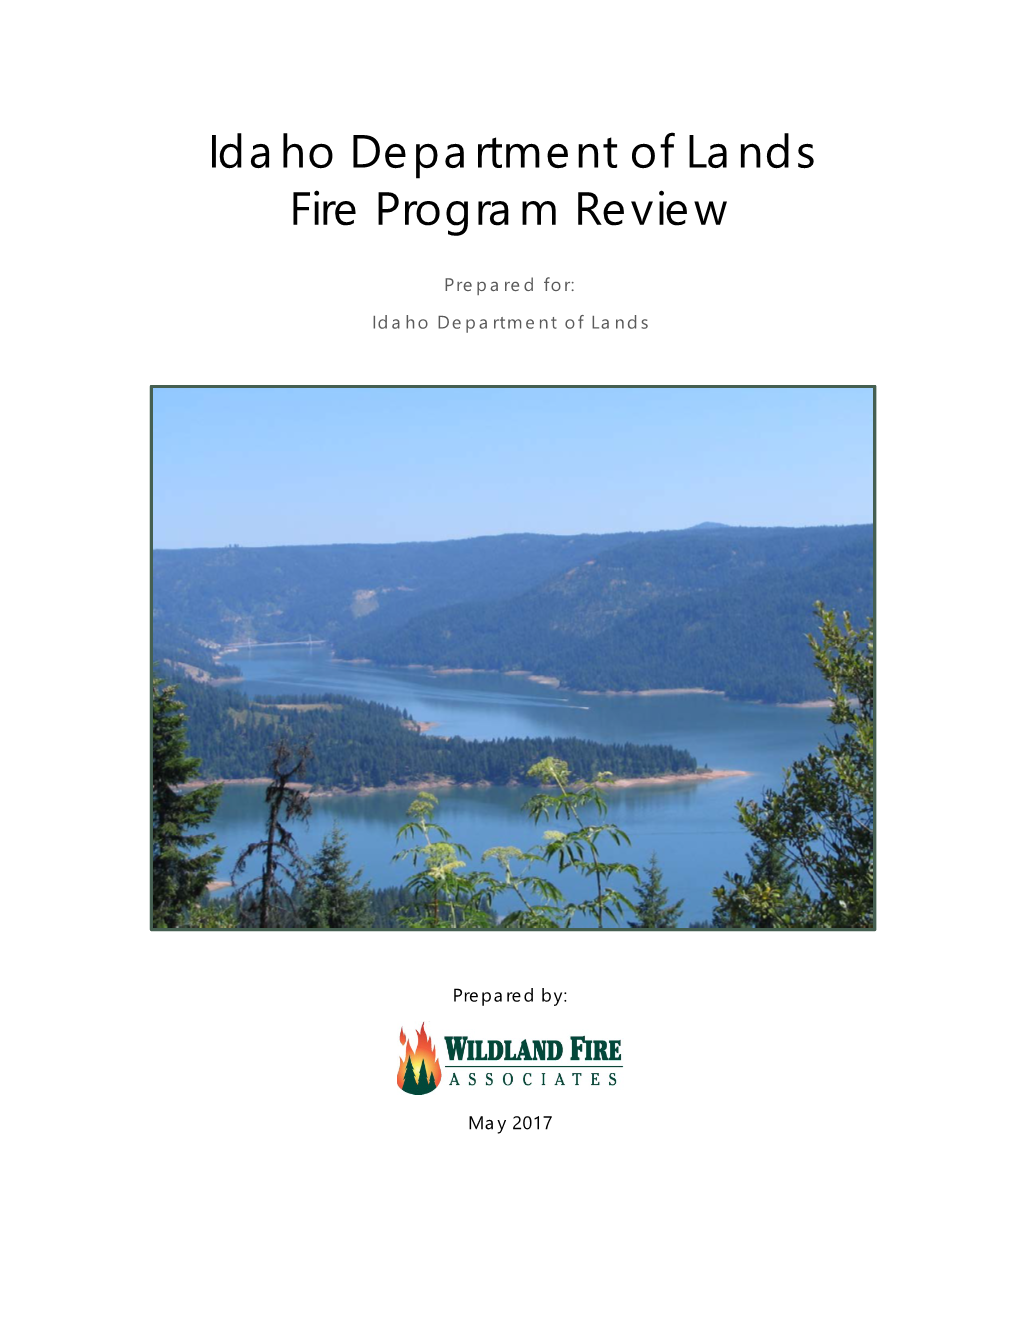 Idaho Department of Lands Fire Program Review